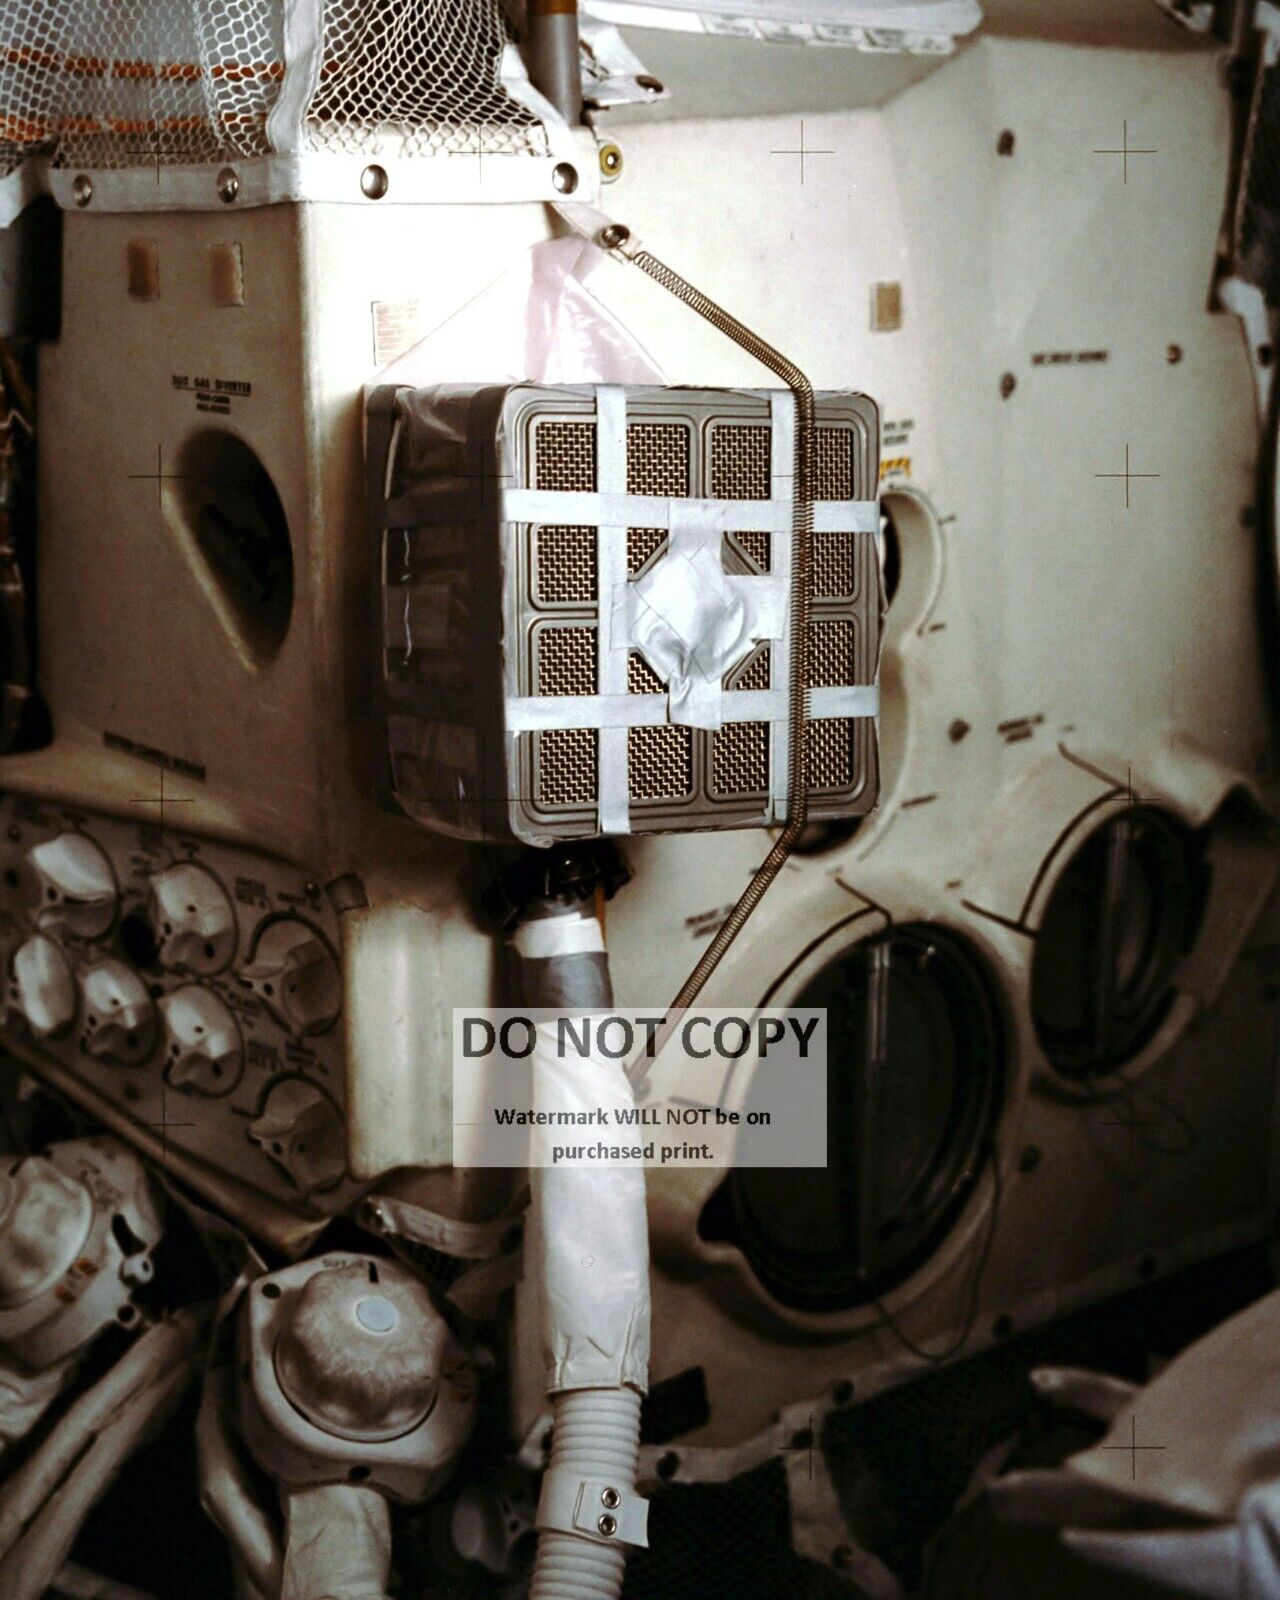 APOLLO 13 MAKE-SHIFT CARBON DIOXIDE ADAPTER - 8X10 NASA PHOTO (DD461)